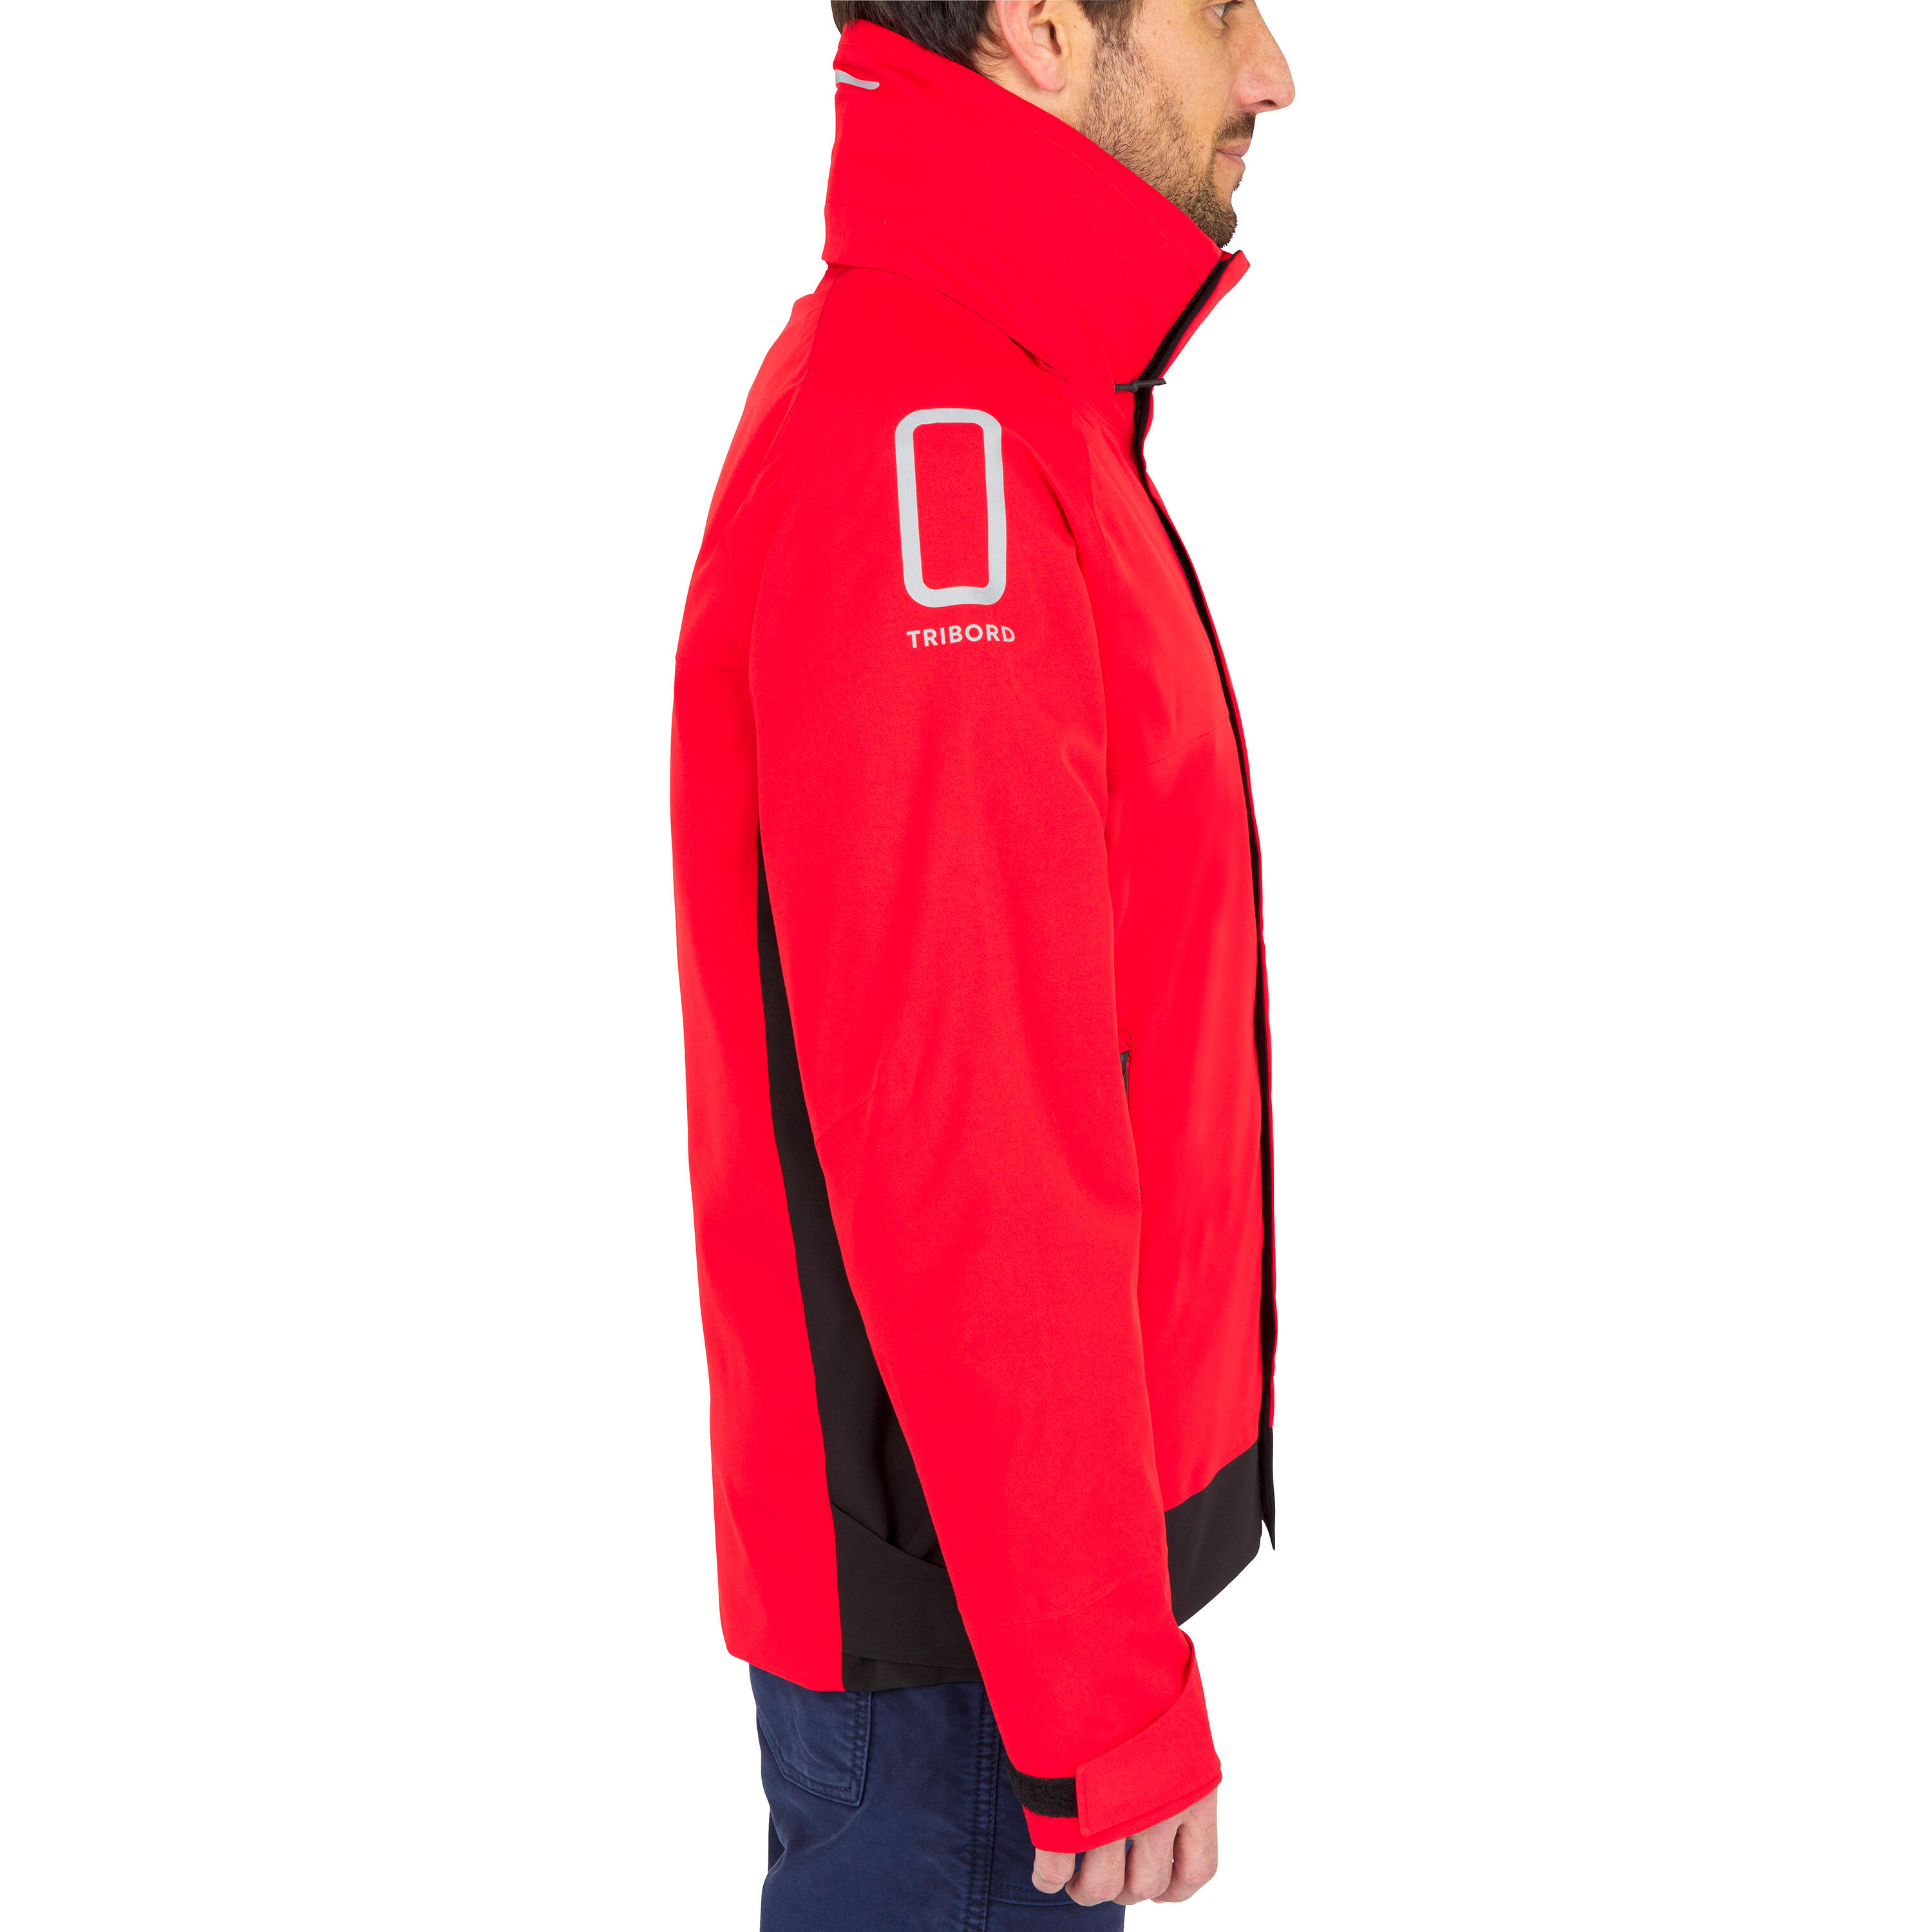 Men's Sailing Jacket - Waterproof Jacket Sailing 500 red black 3/12